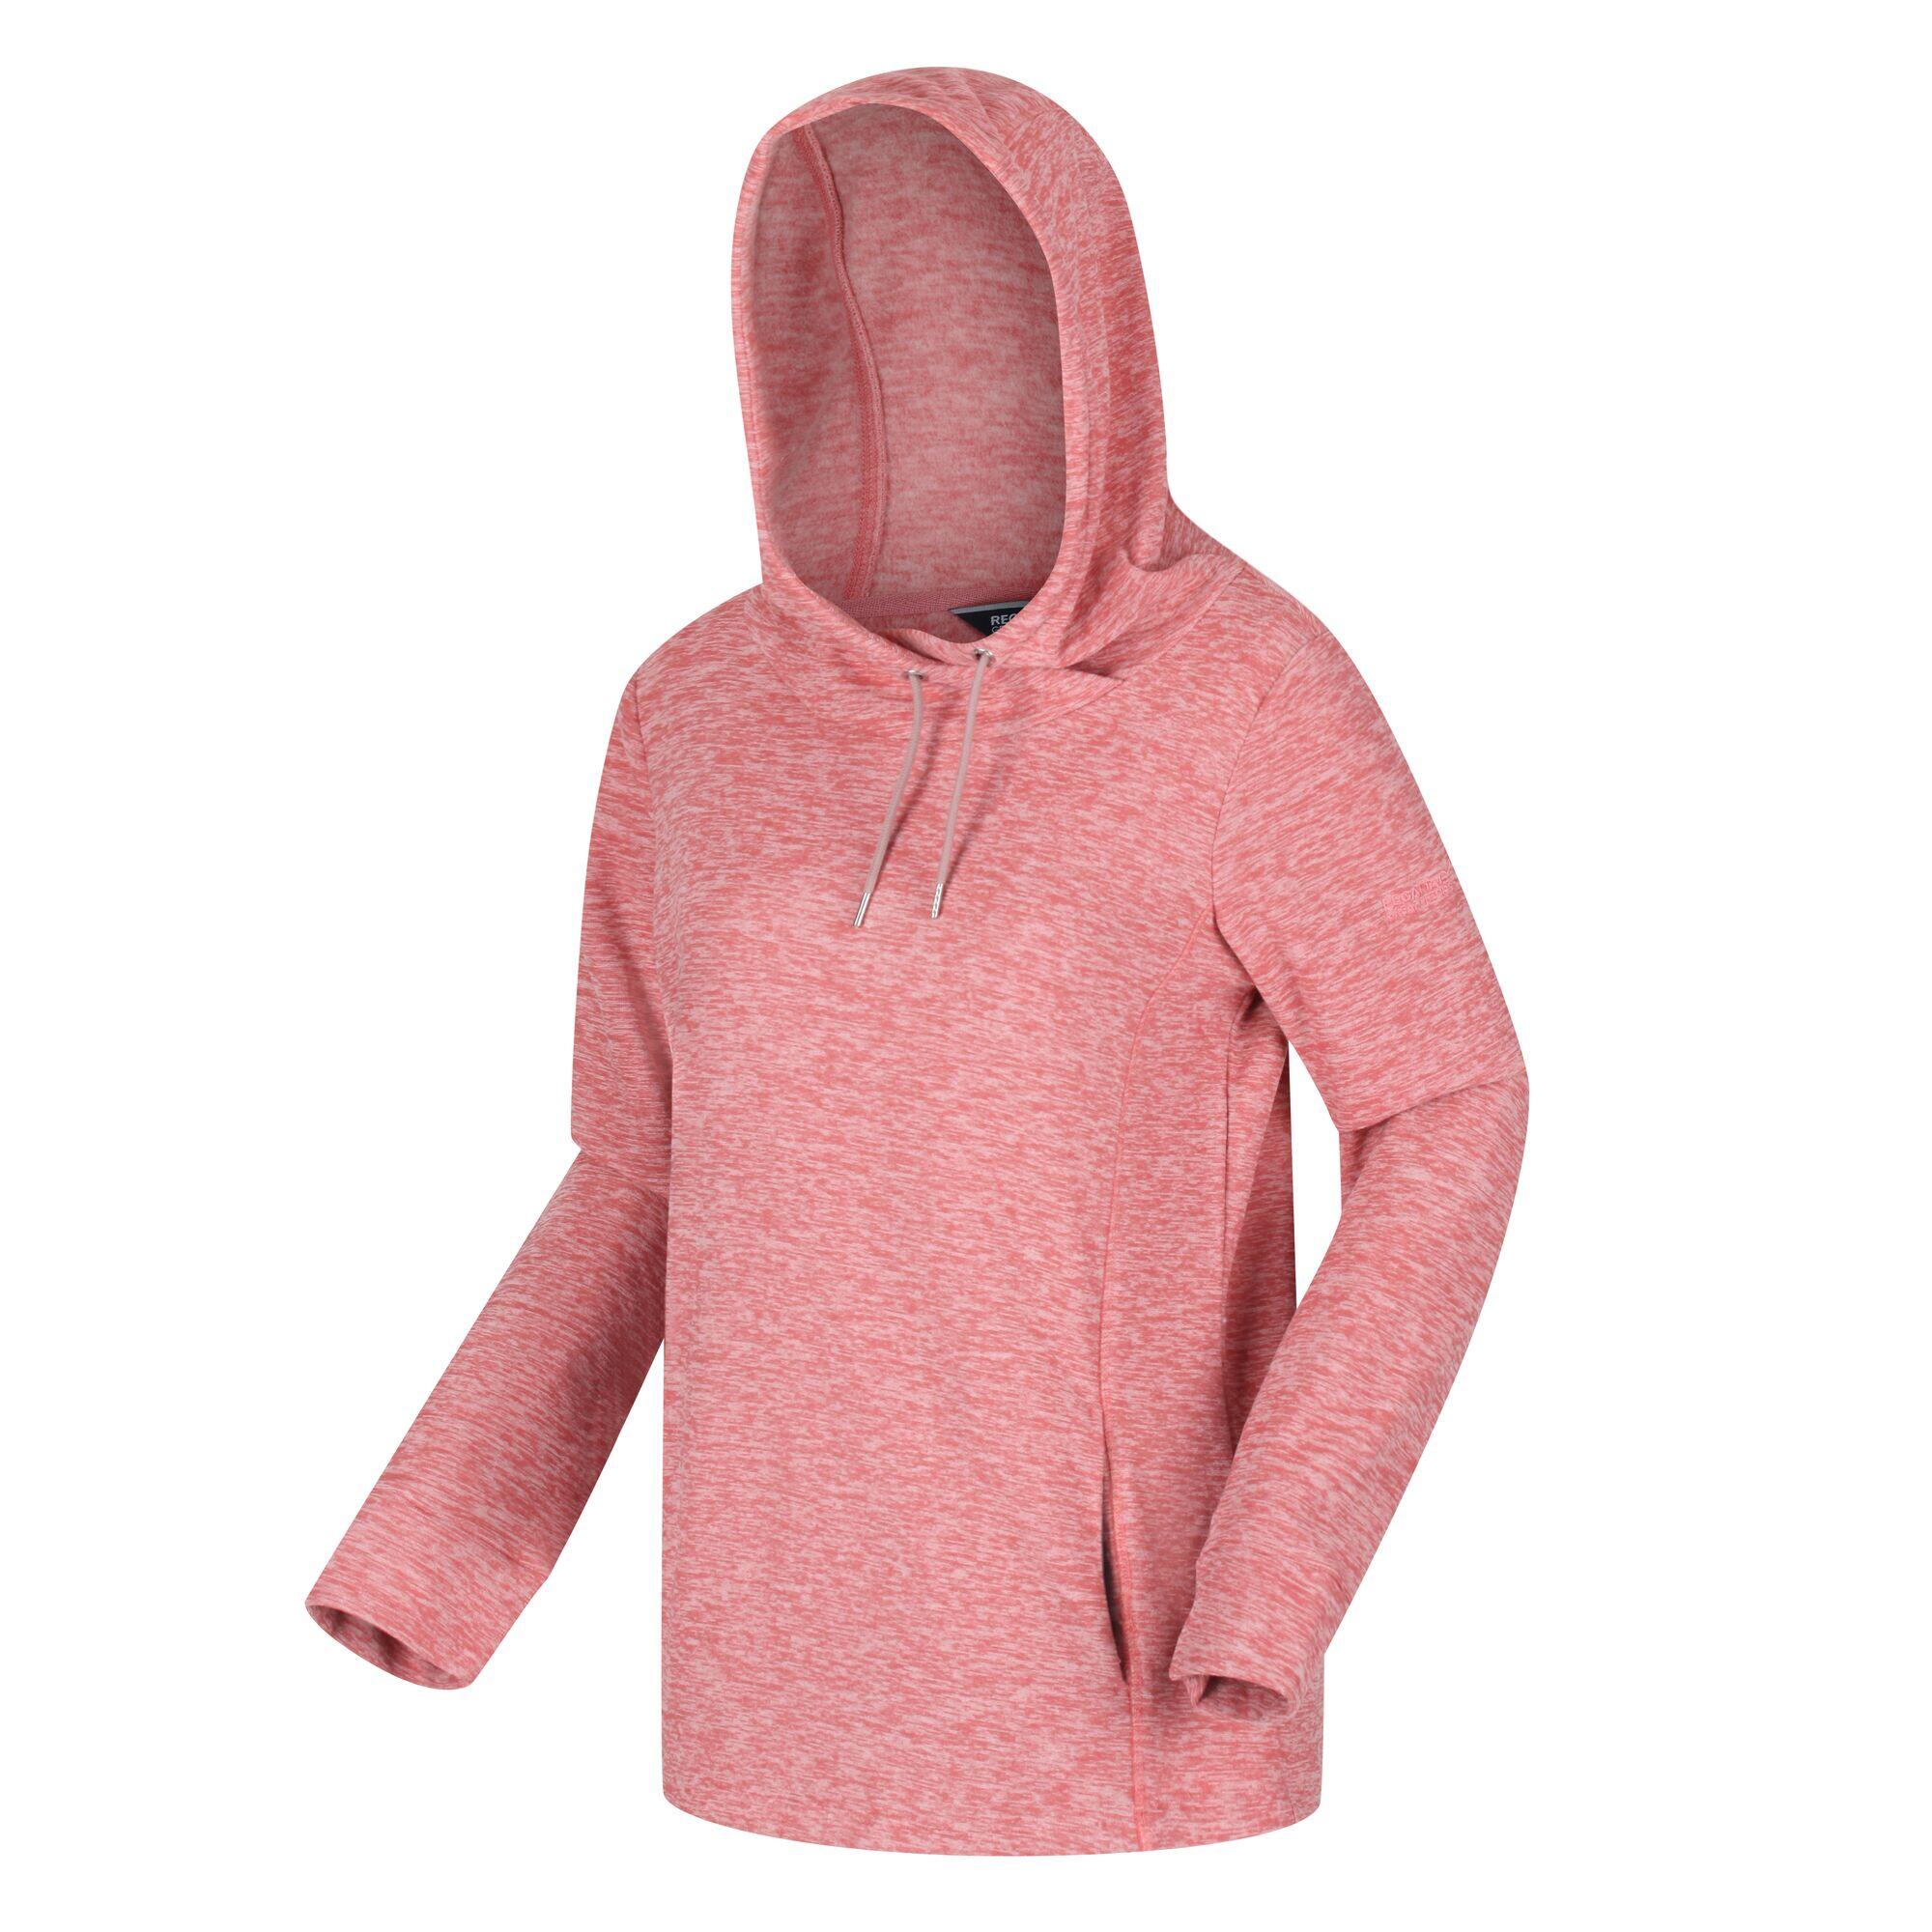 Kizmitt II Women's Hiking Hooded Fleece - Pale Pink 4/5